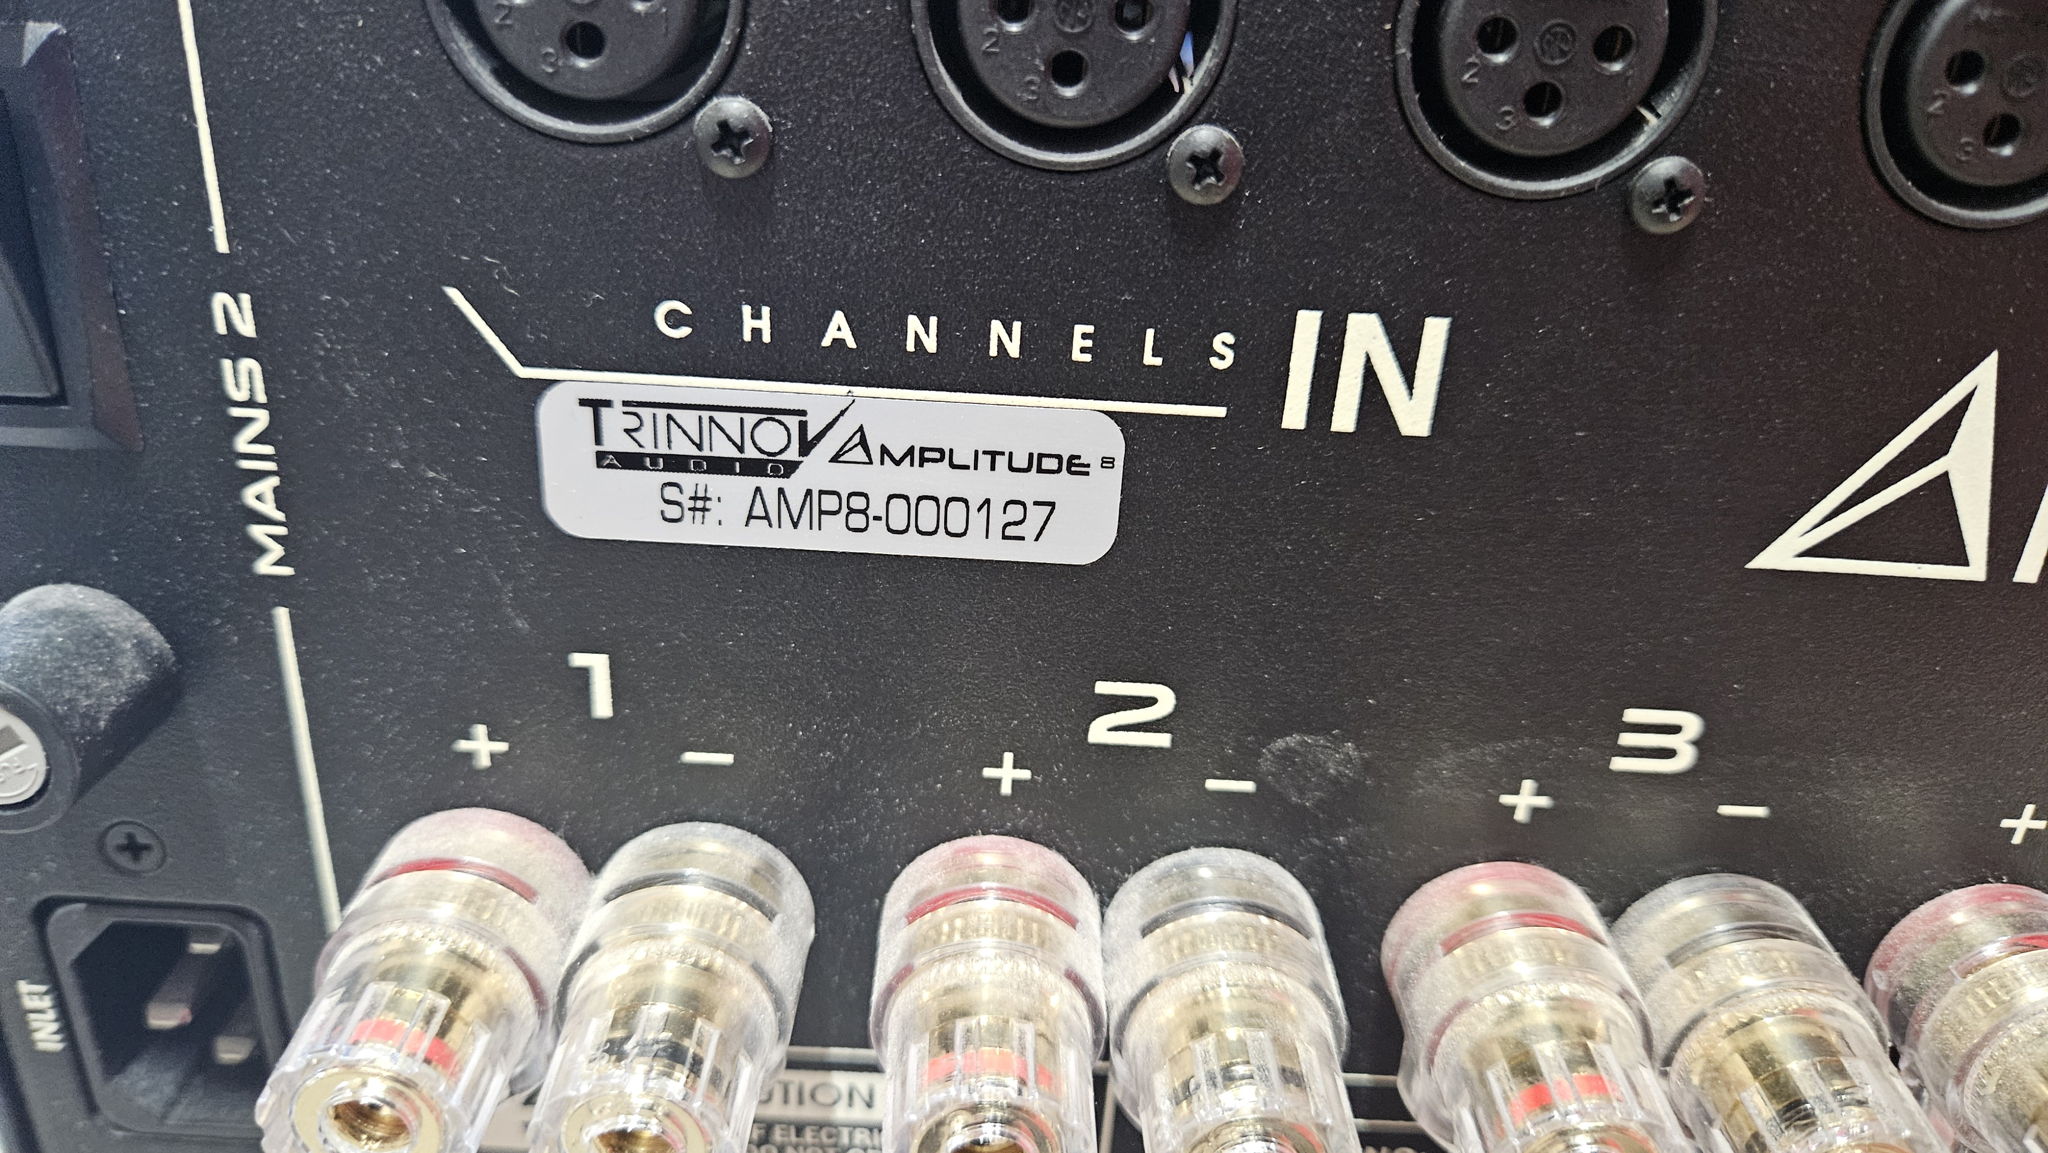 Trinnov Audio Amplitude 8 - Not the M version 5